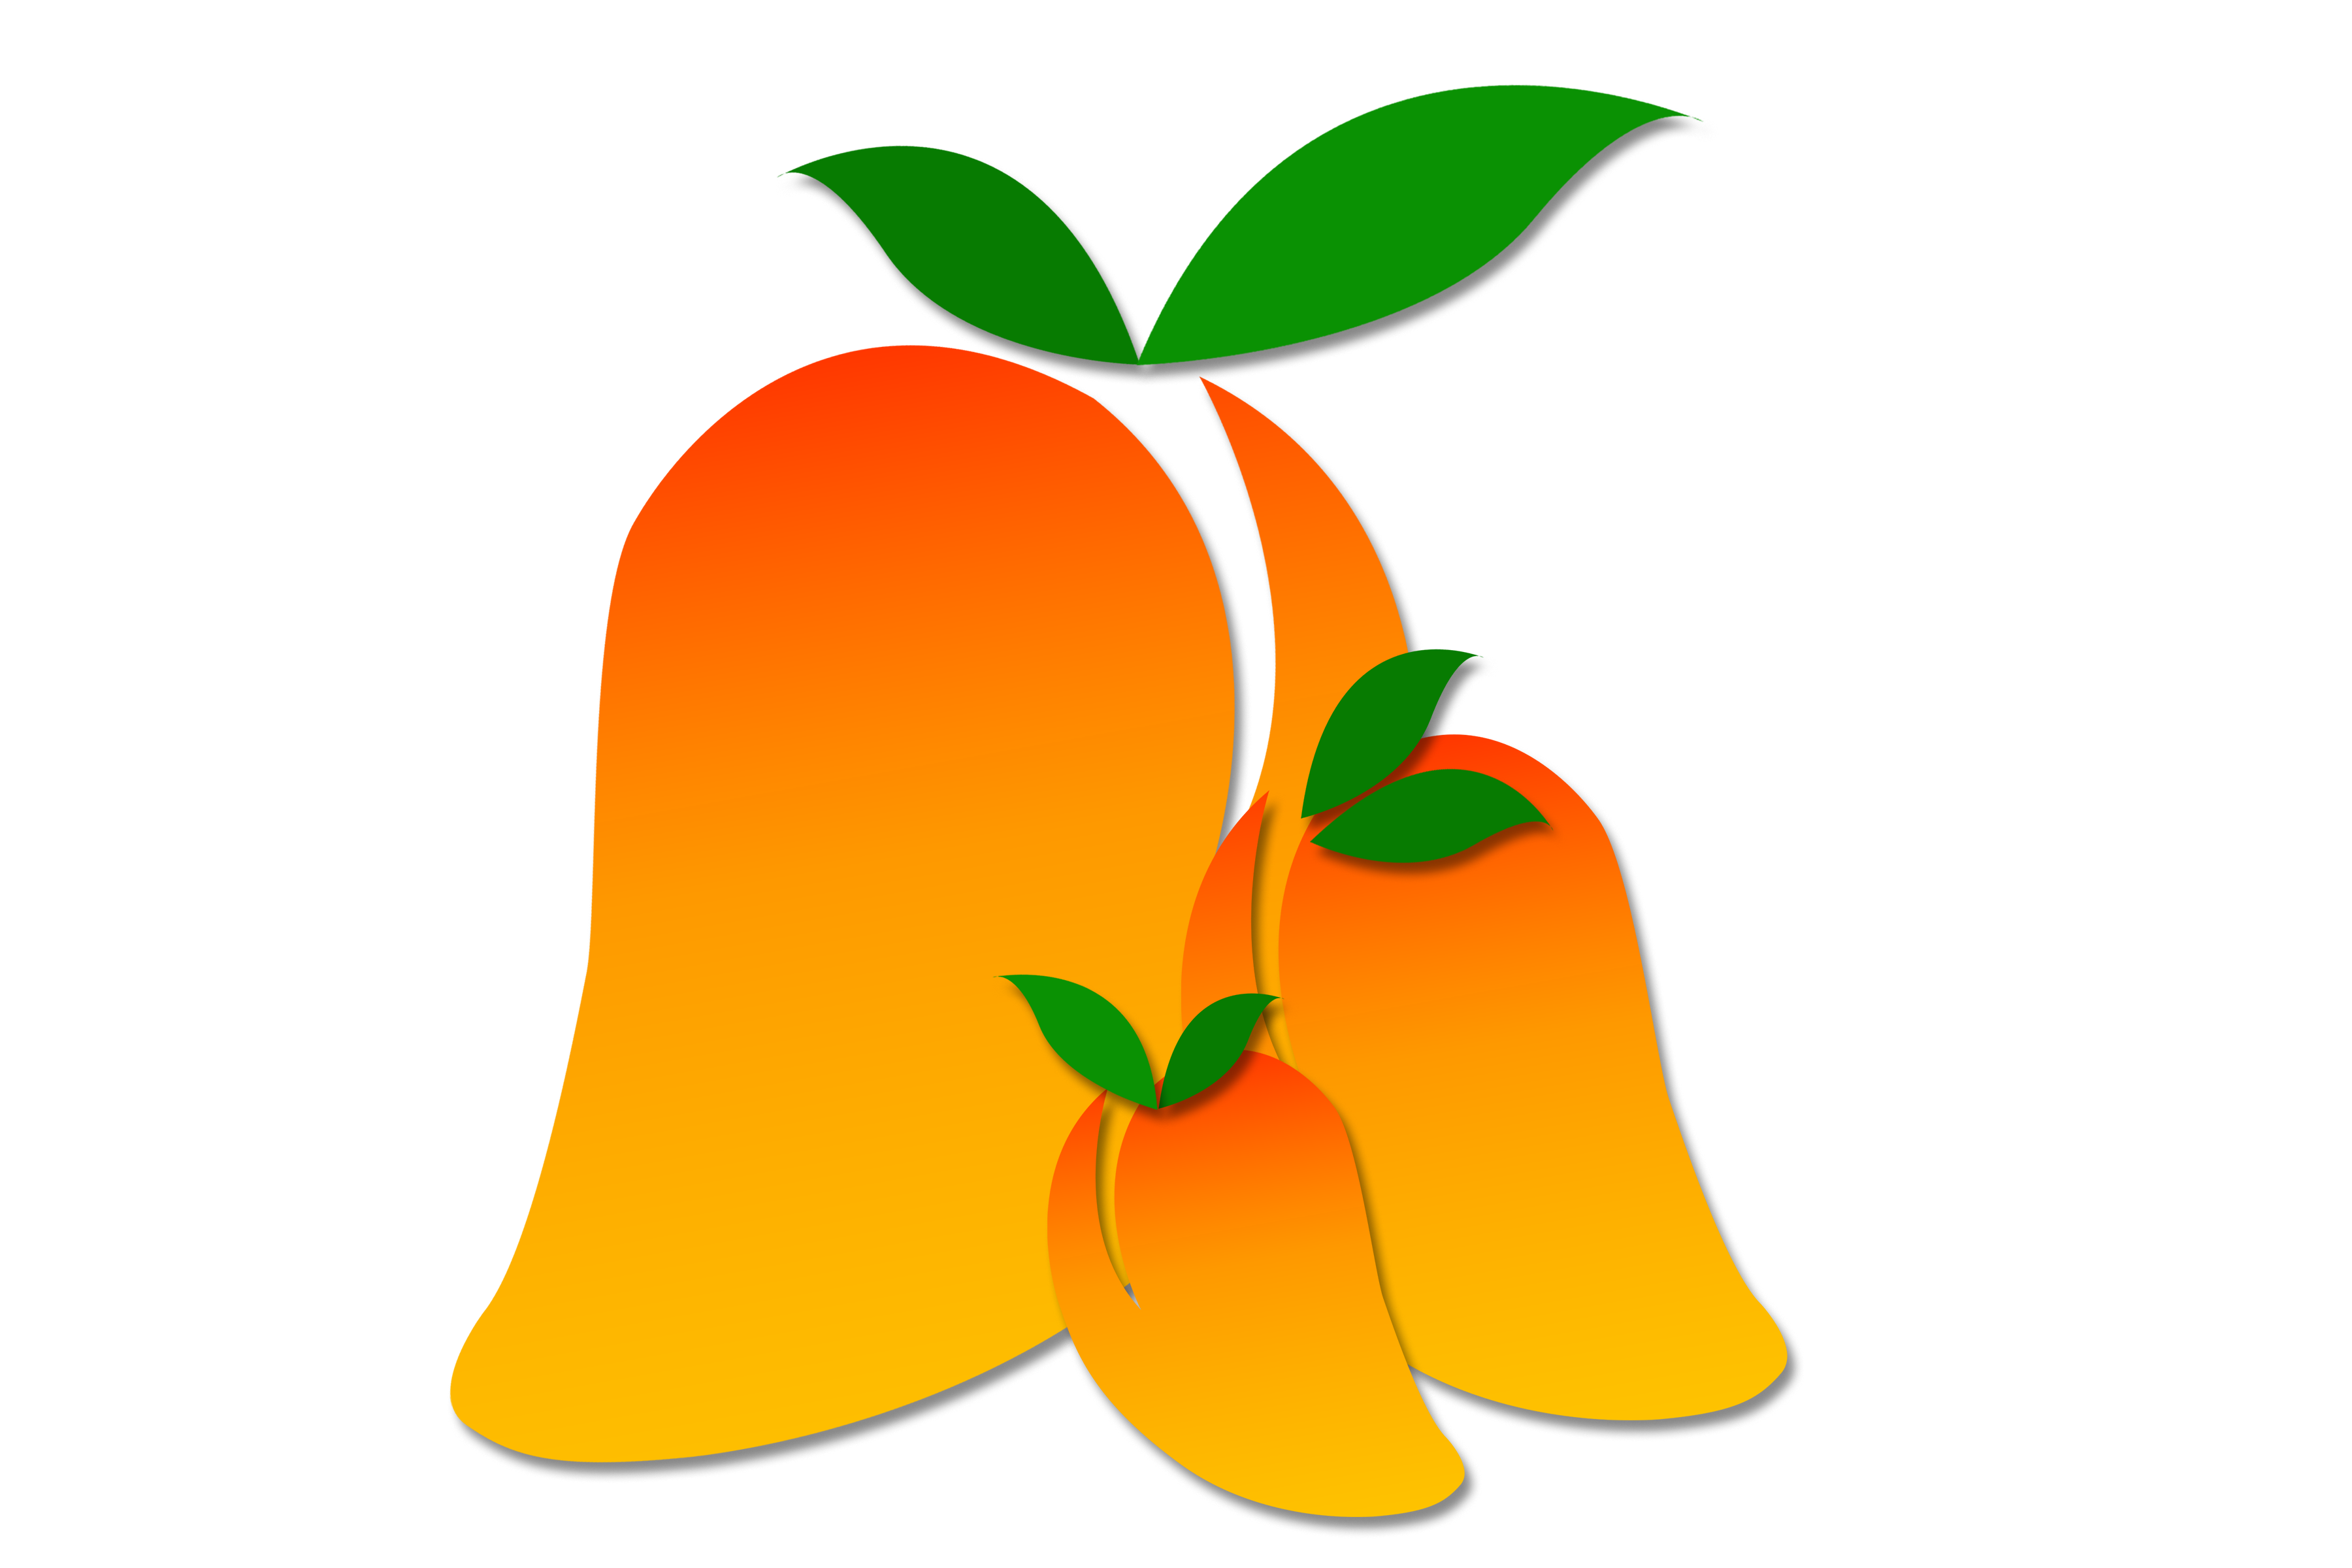 pngox-mango-fruit-vector-png-images